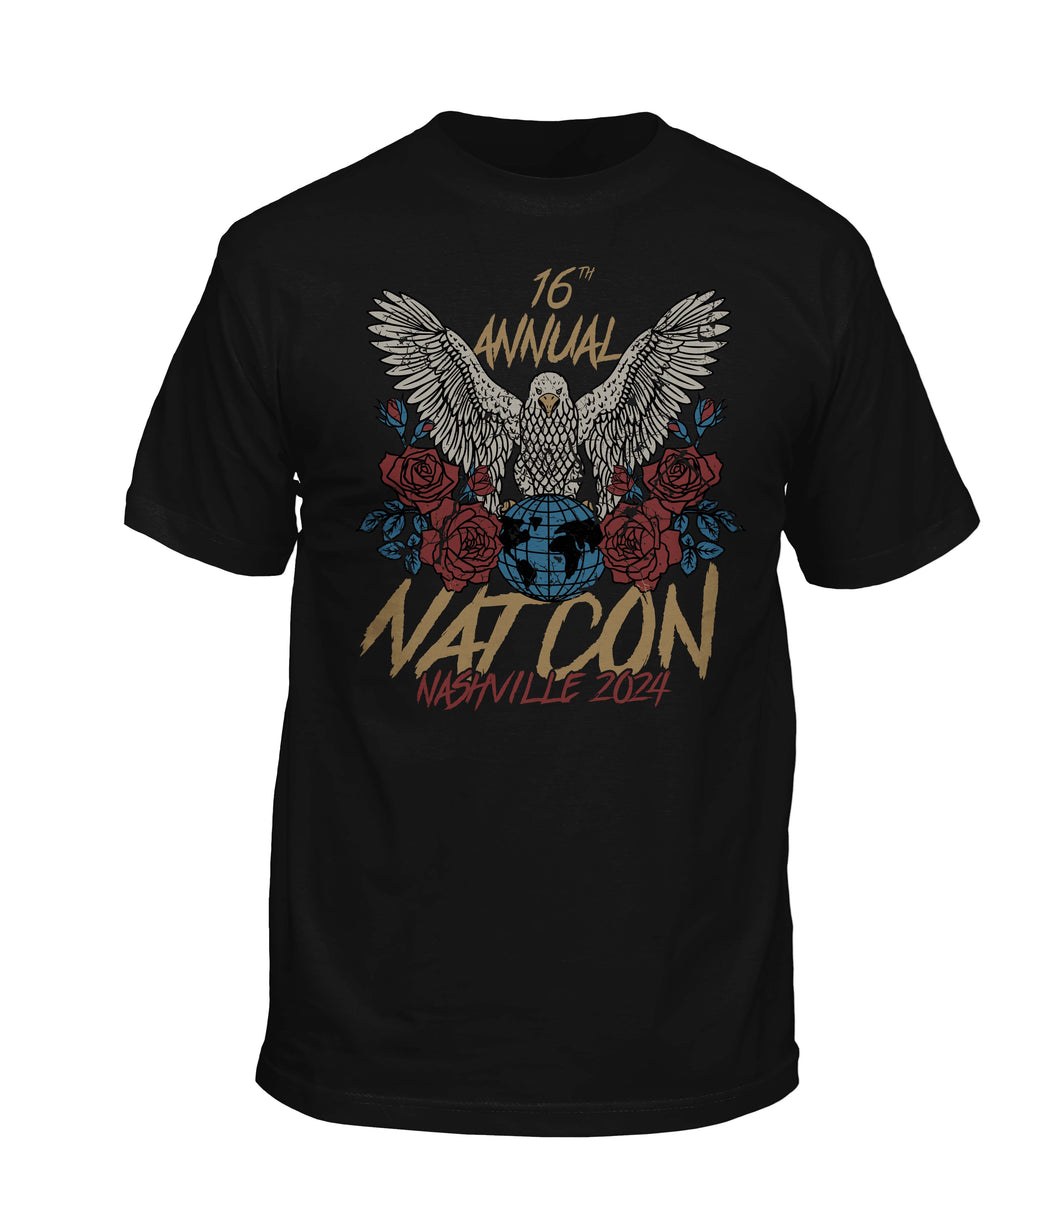 16th Annual NatCon Limited Edition 